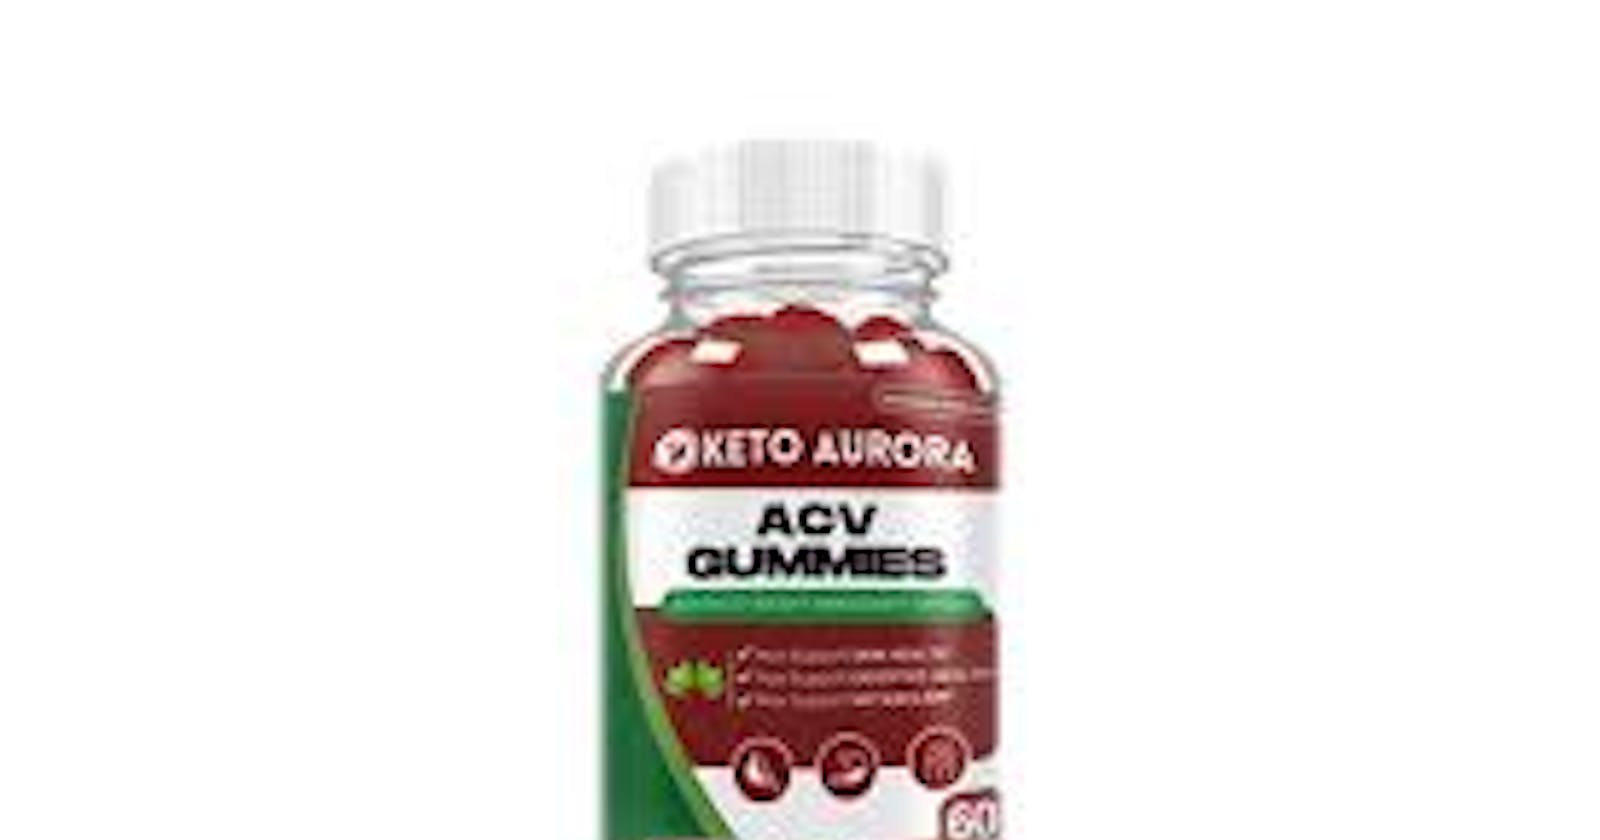 Keto Aurora ACV Gummies Review and Price